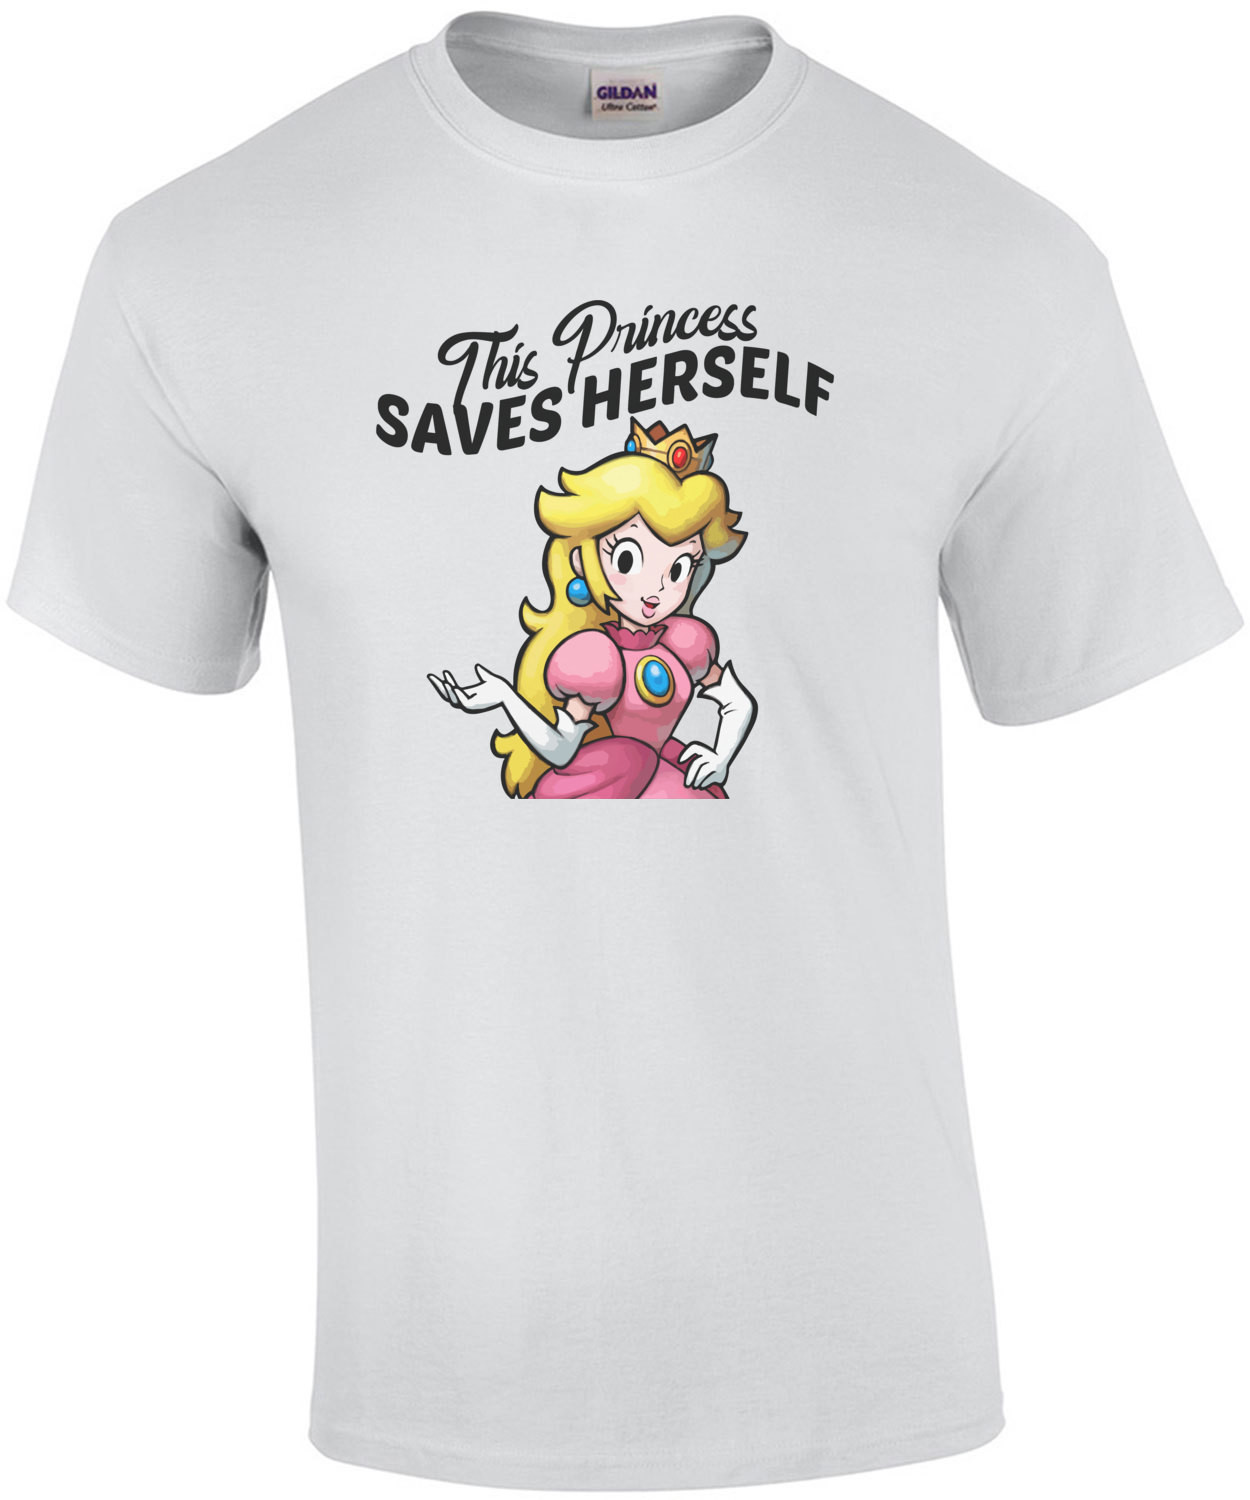 This princess saves herself - feminist t-shirt - Super Mario Bros T-Shirt